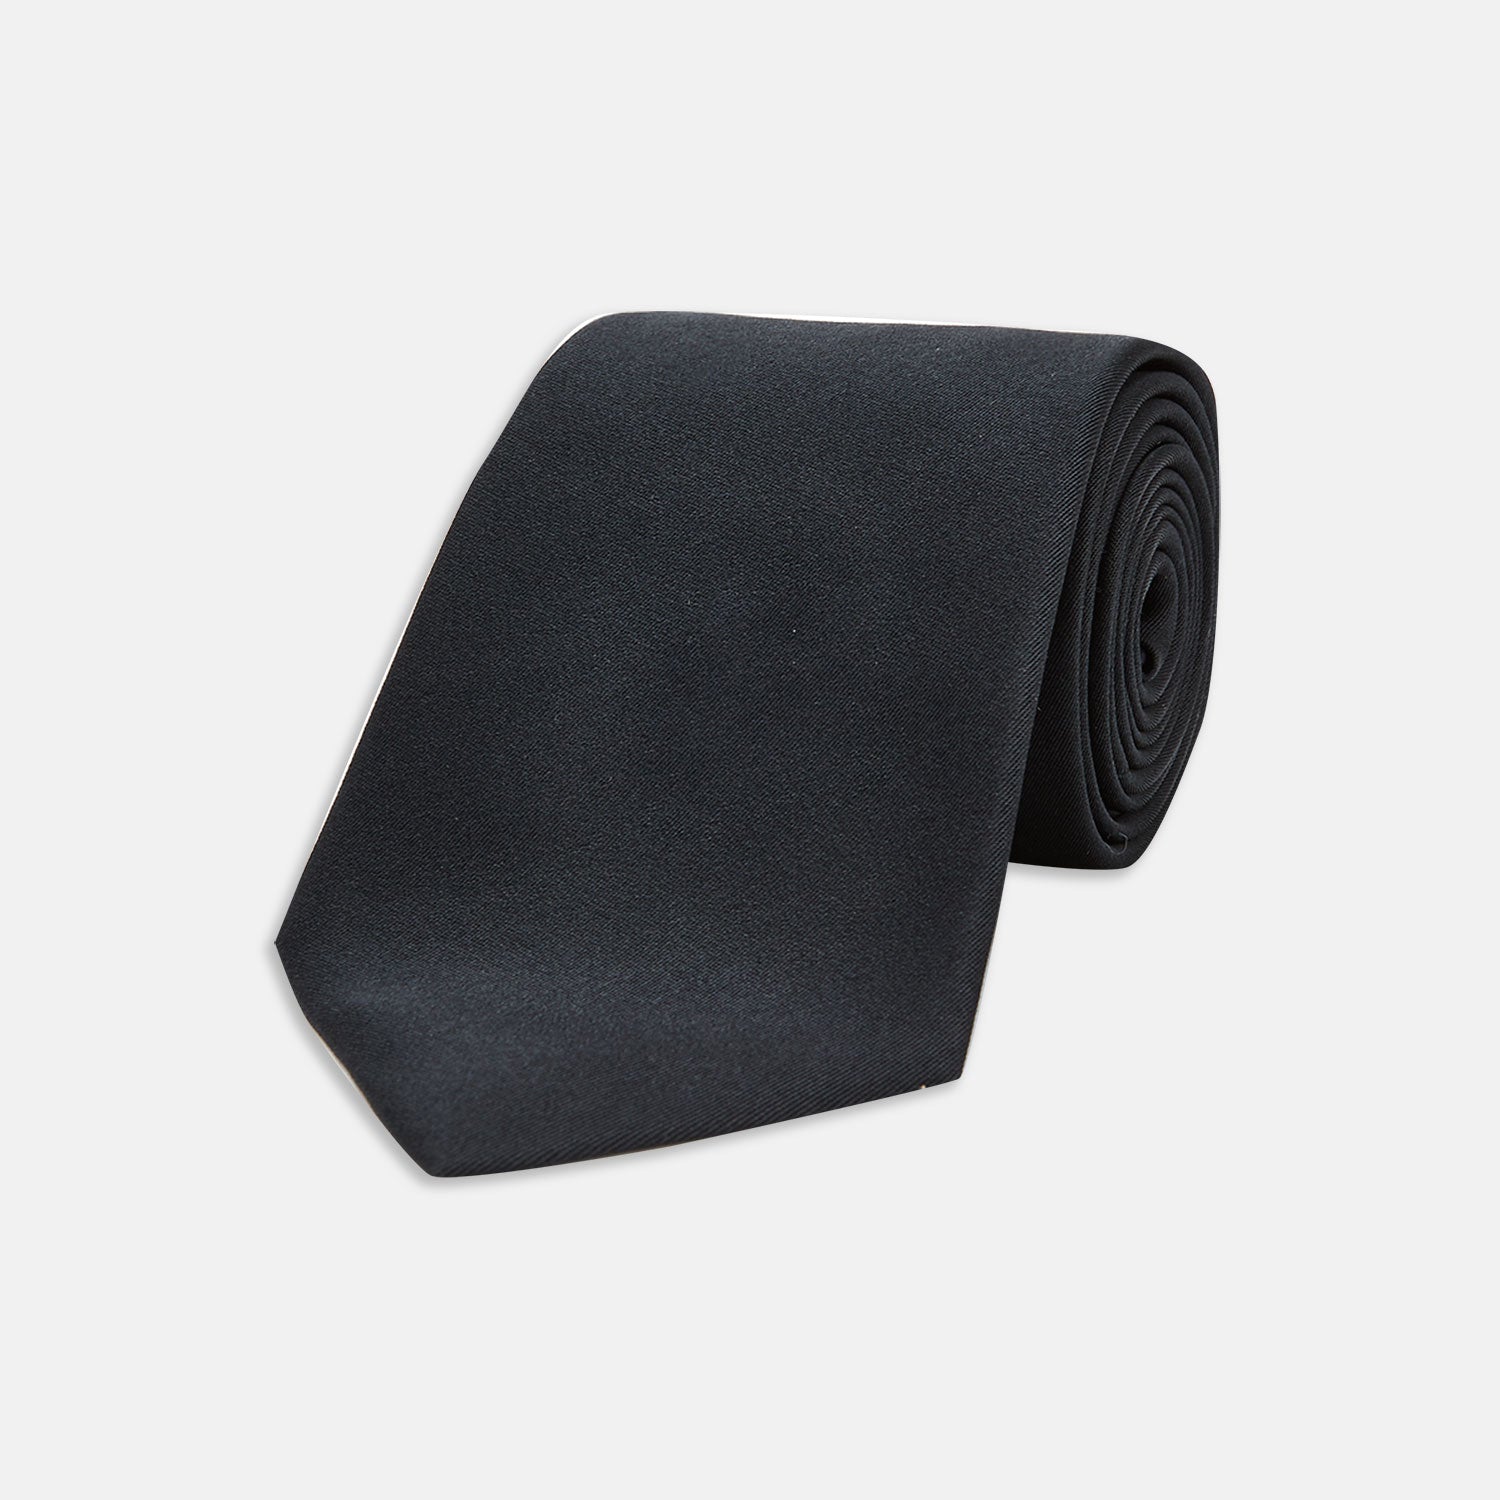 Black Plain Satin Silk Tie